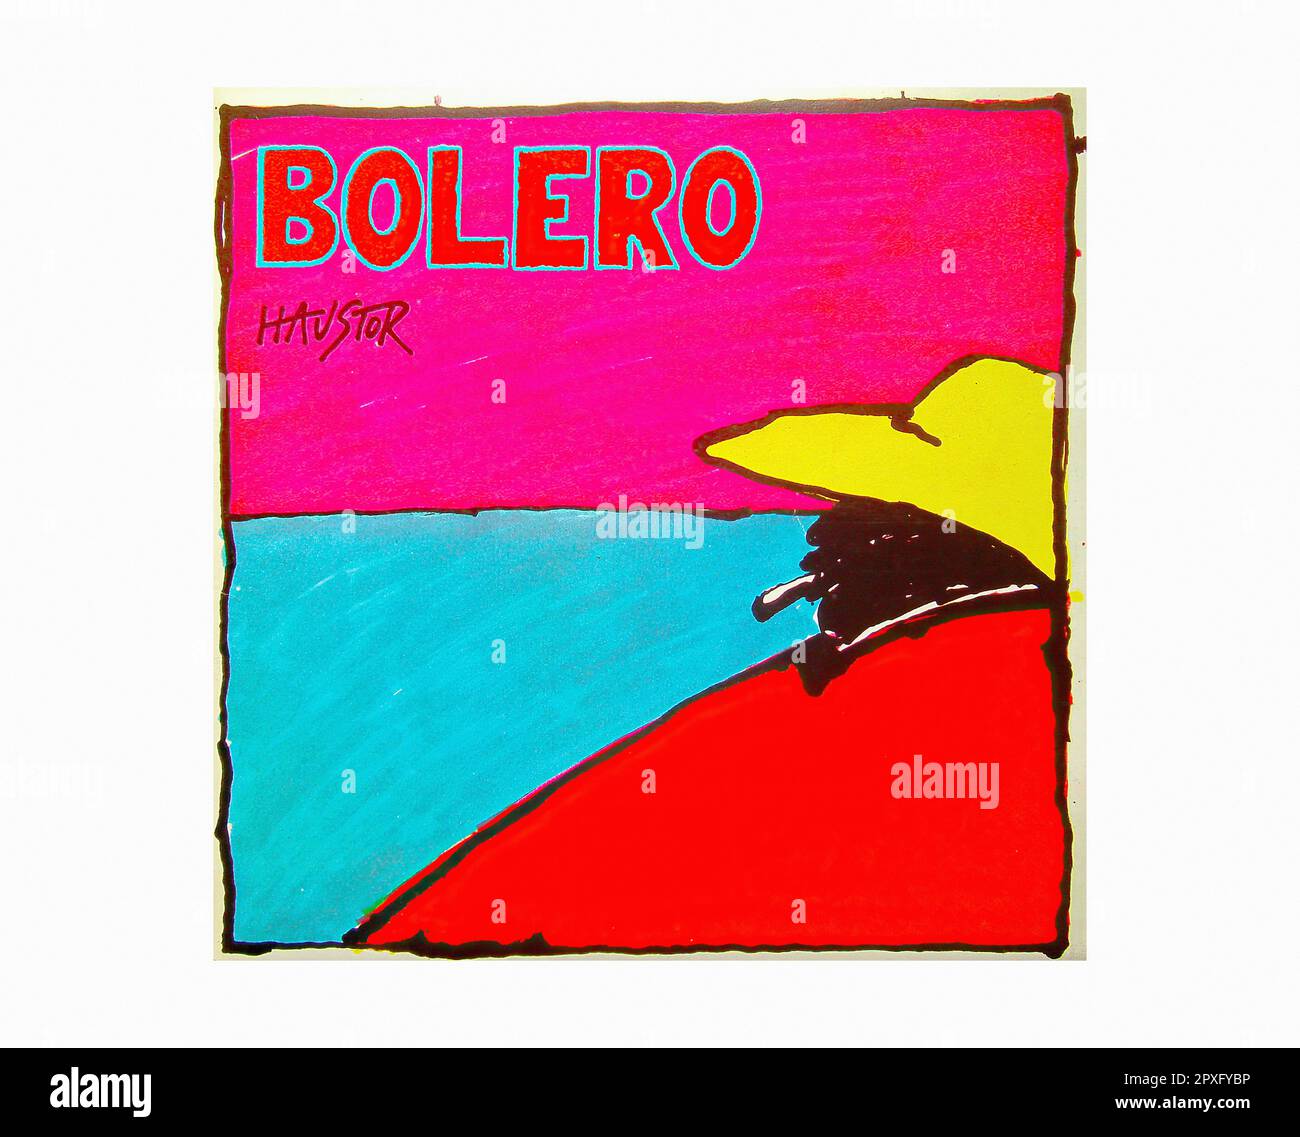 Haustor - Bolero [1985] - Vintage Vinyl Record Sleeve Stock Photo - Alamy